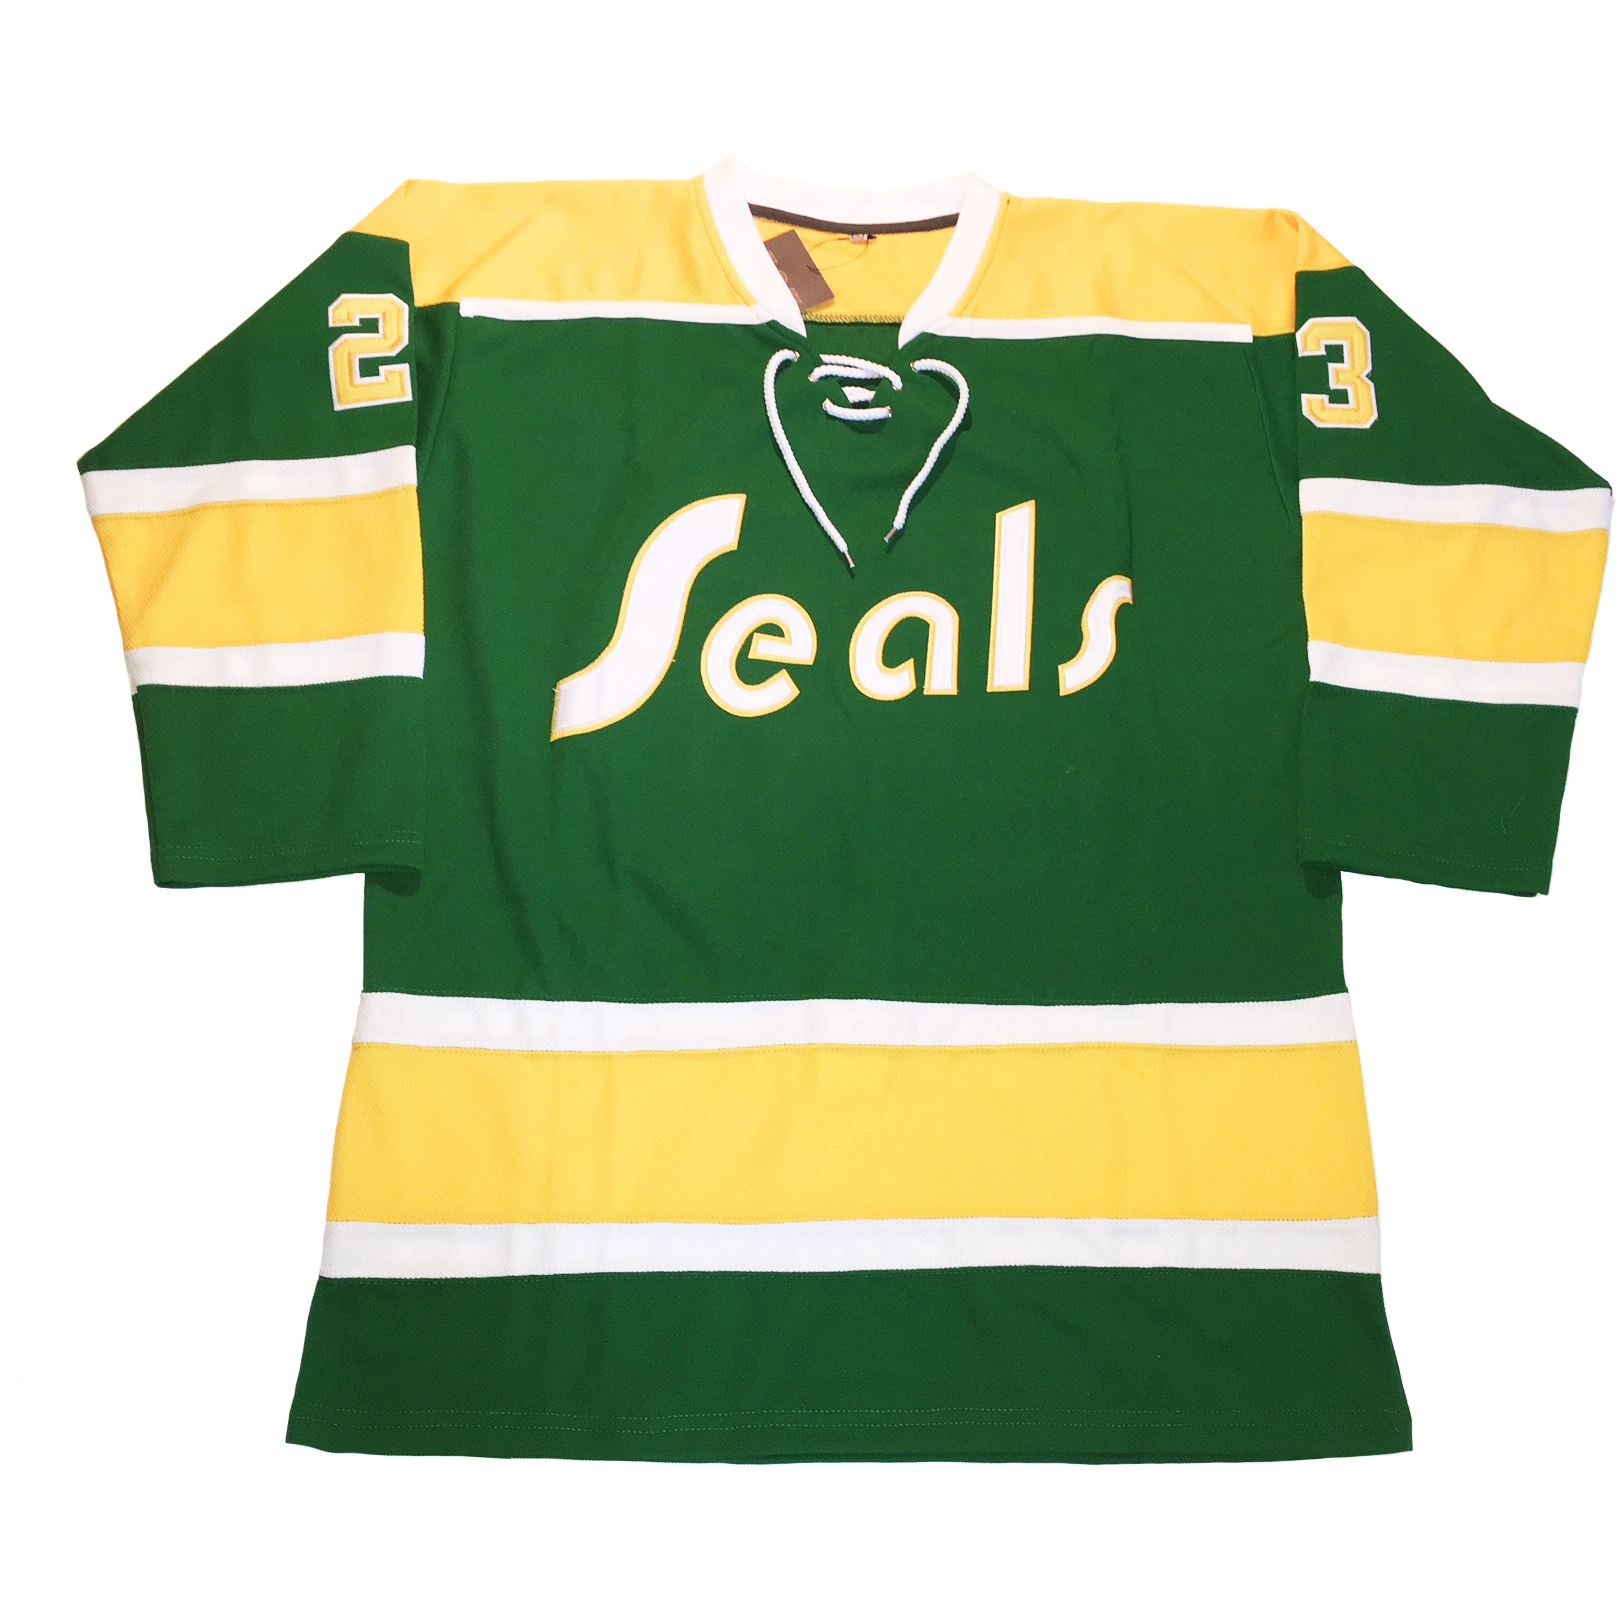 San Diego Seals Gear, San Diego Seals Jerseys, Apparel, Shirts